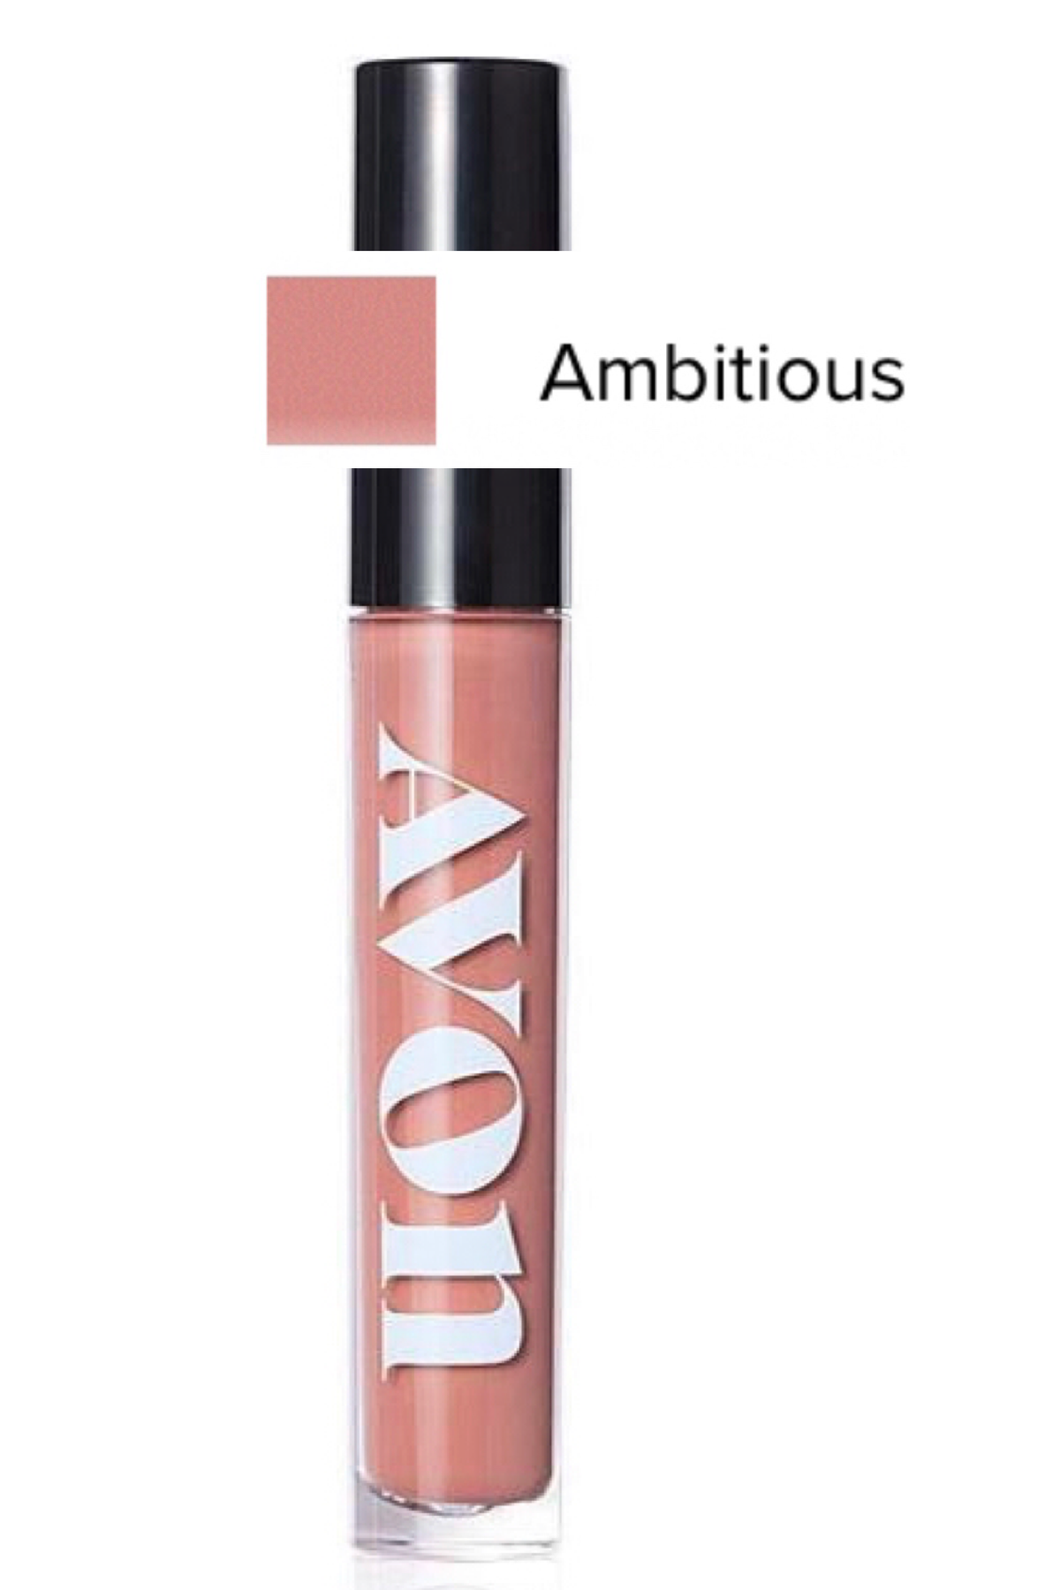 Ambitious Mattitude Liquid Lipstick